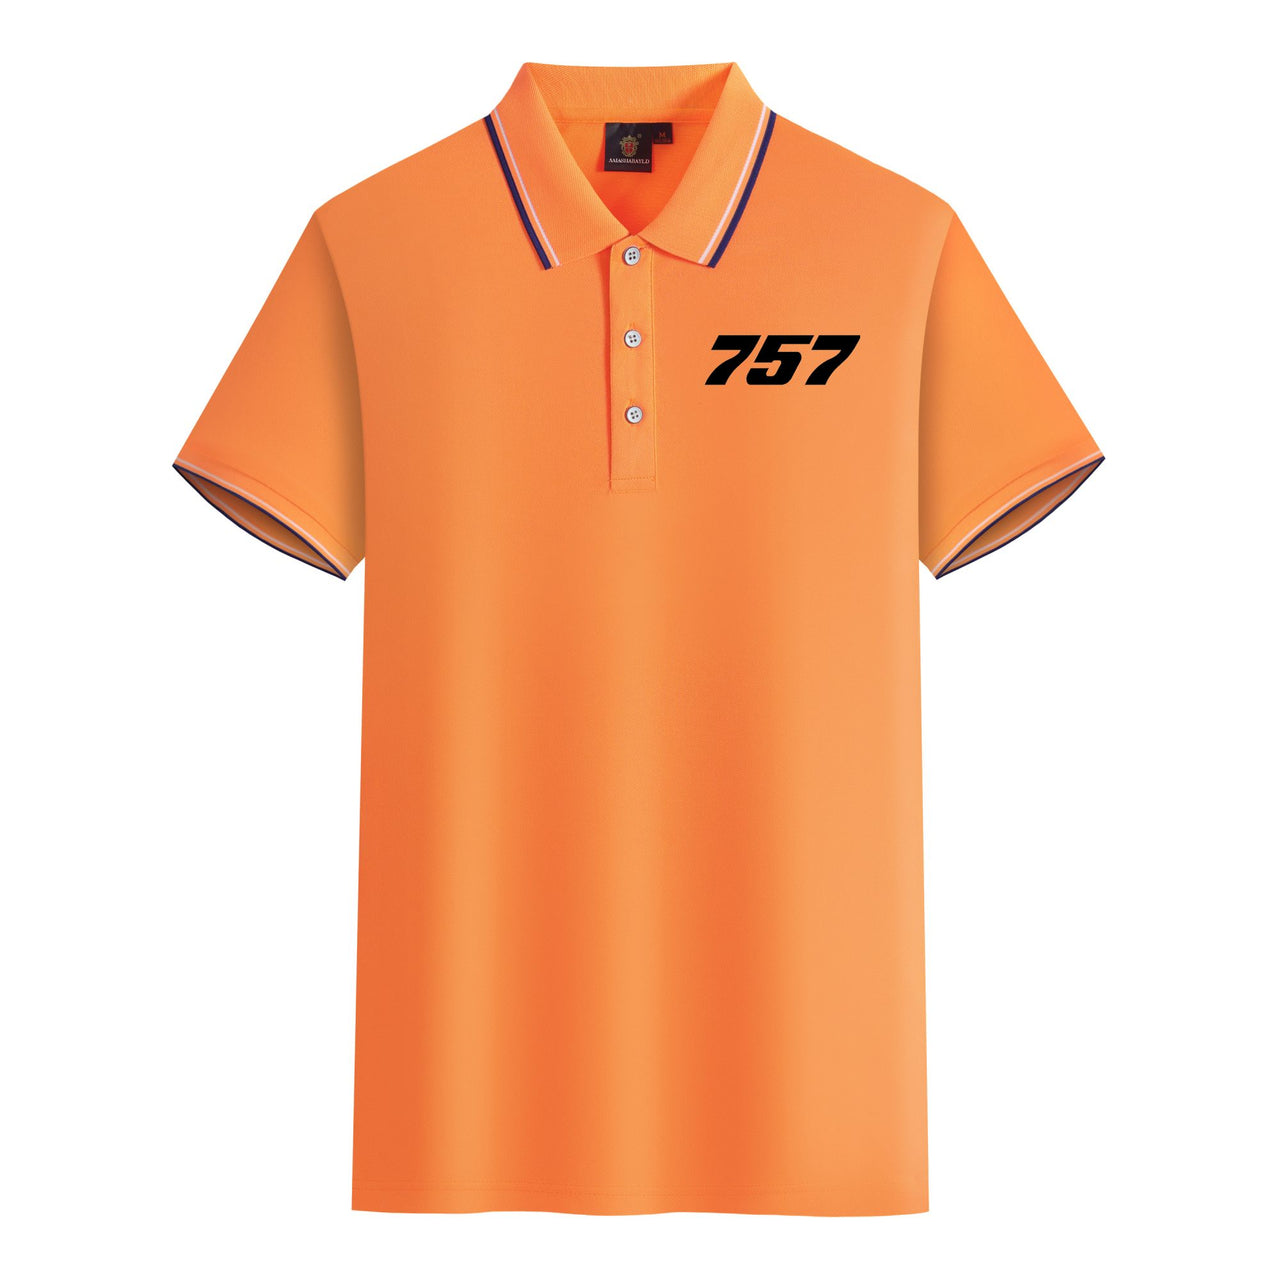 757 Flat Text Designed Stylish Polo T-Shirts